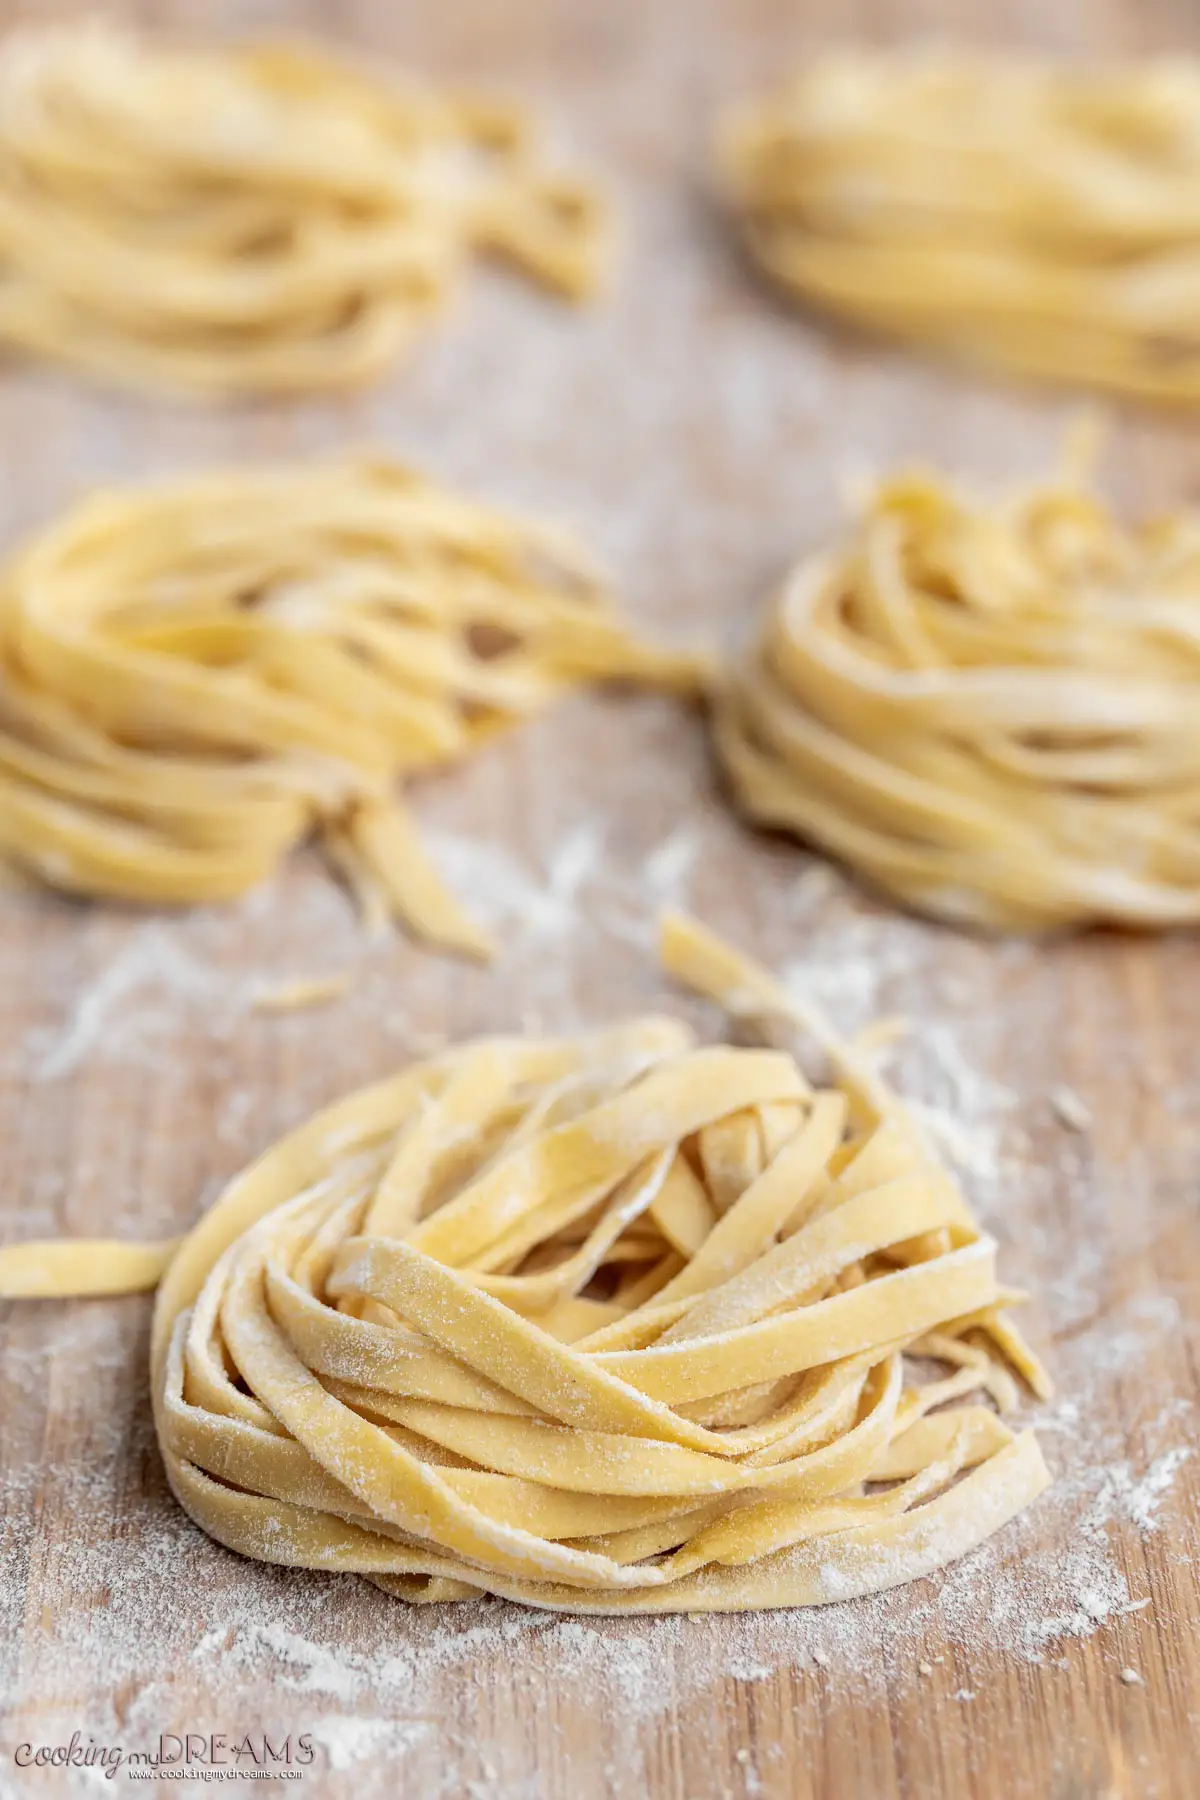 nest of fresh tagliatelle pasta on a cutting board.